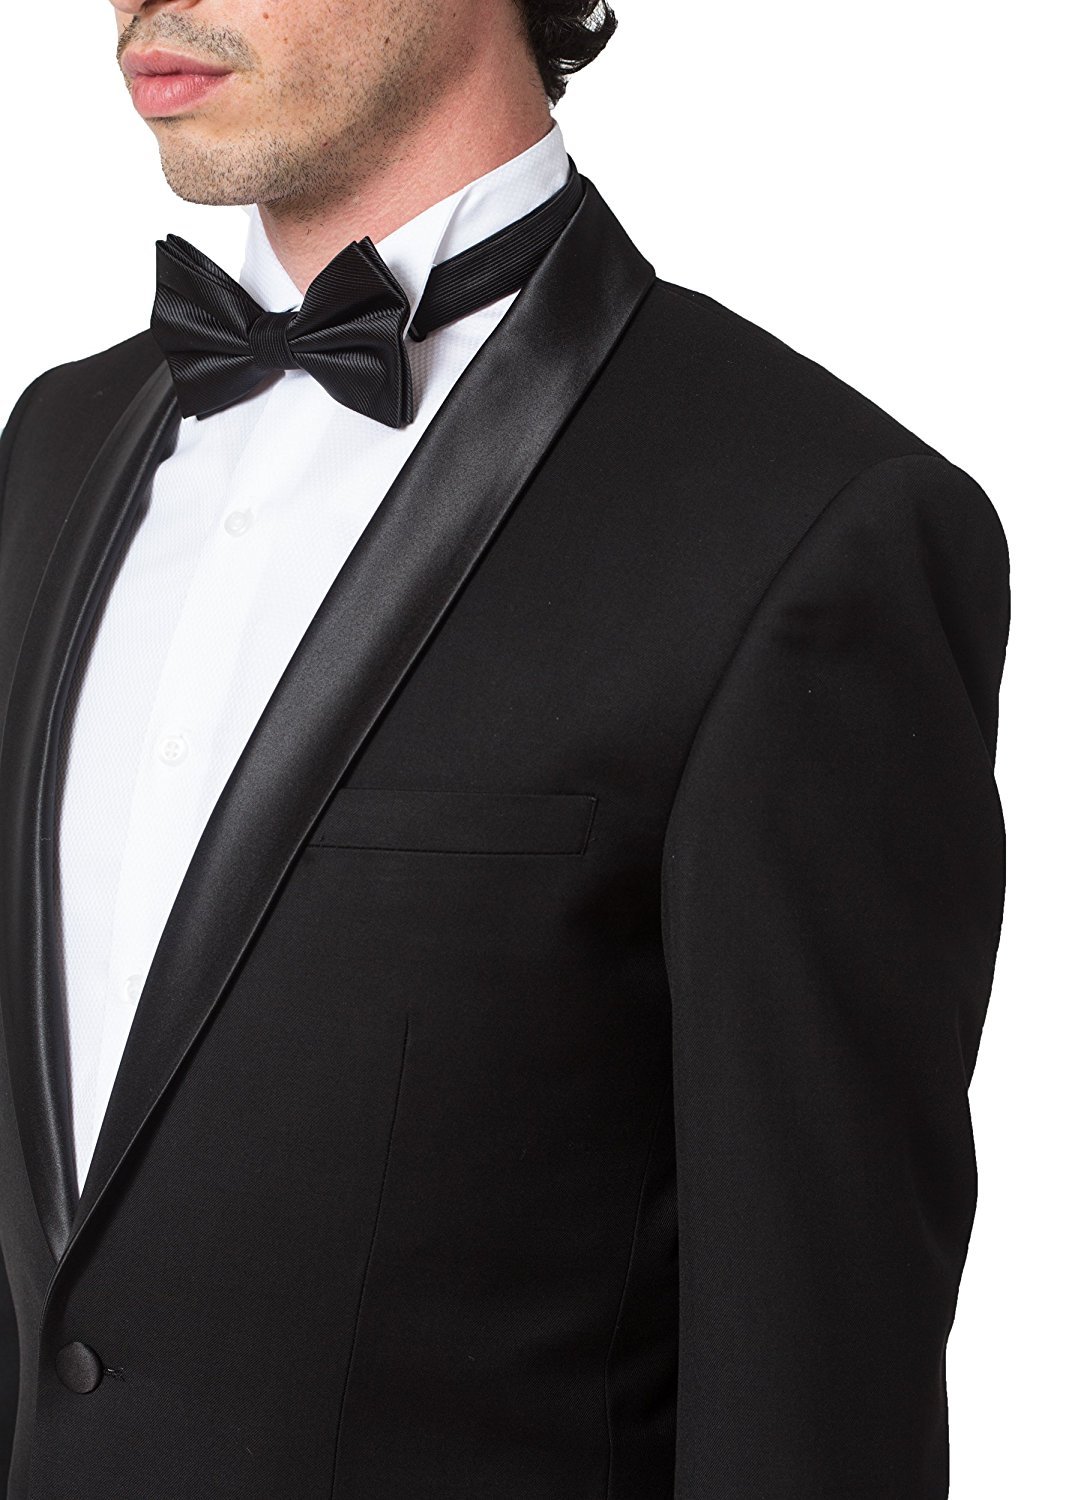 Giorgio Fiorelli Men’s G47815/1 One Button Modern Fit Two-Piece Shawl Collar Tuxedo Suit Set - Black - 44S - image 4 of 5